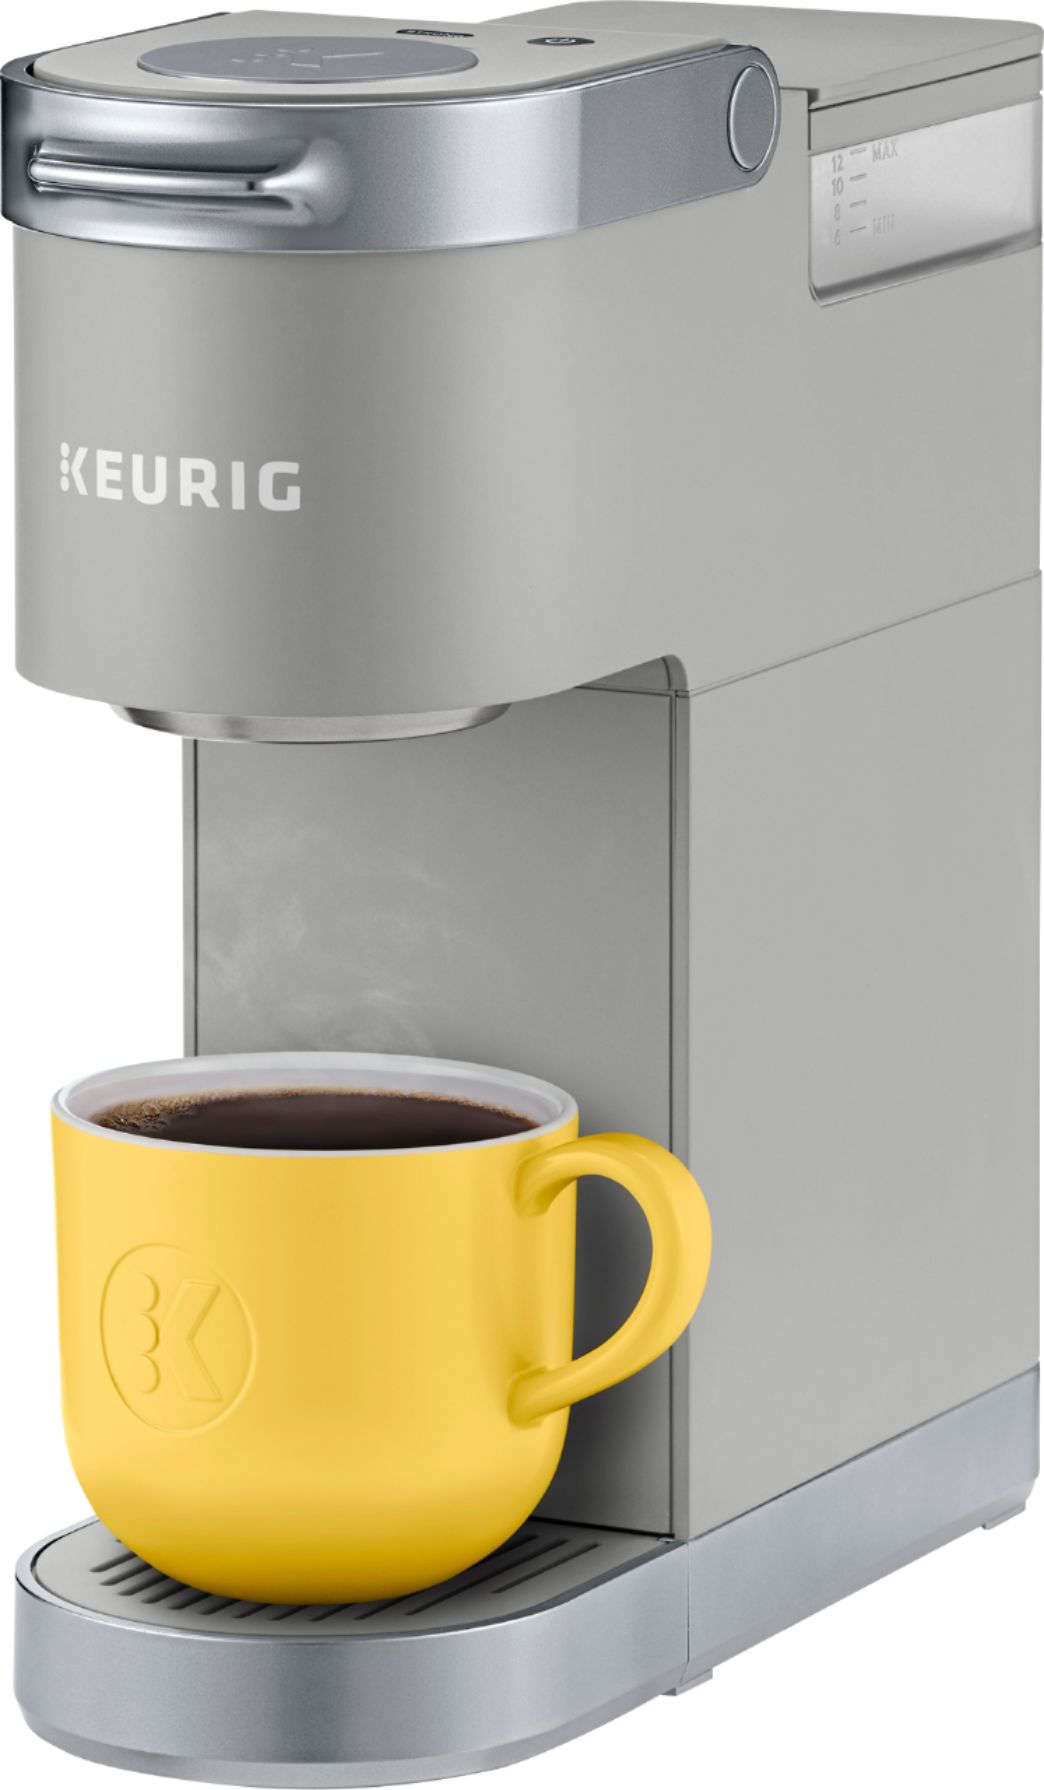 Keurig K-Mini Single Serve K-Cup Pod Coffee Maker - Studio Gray New Op -  beyond exchange